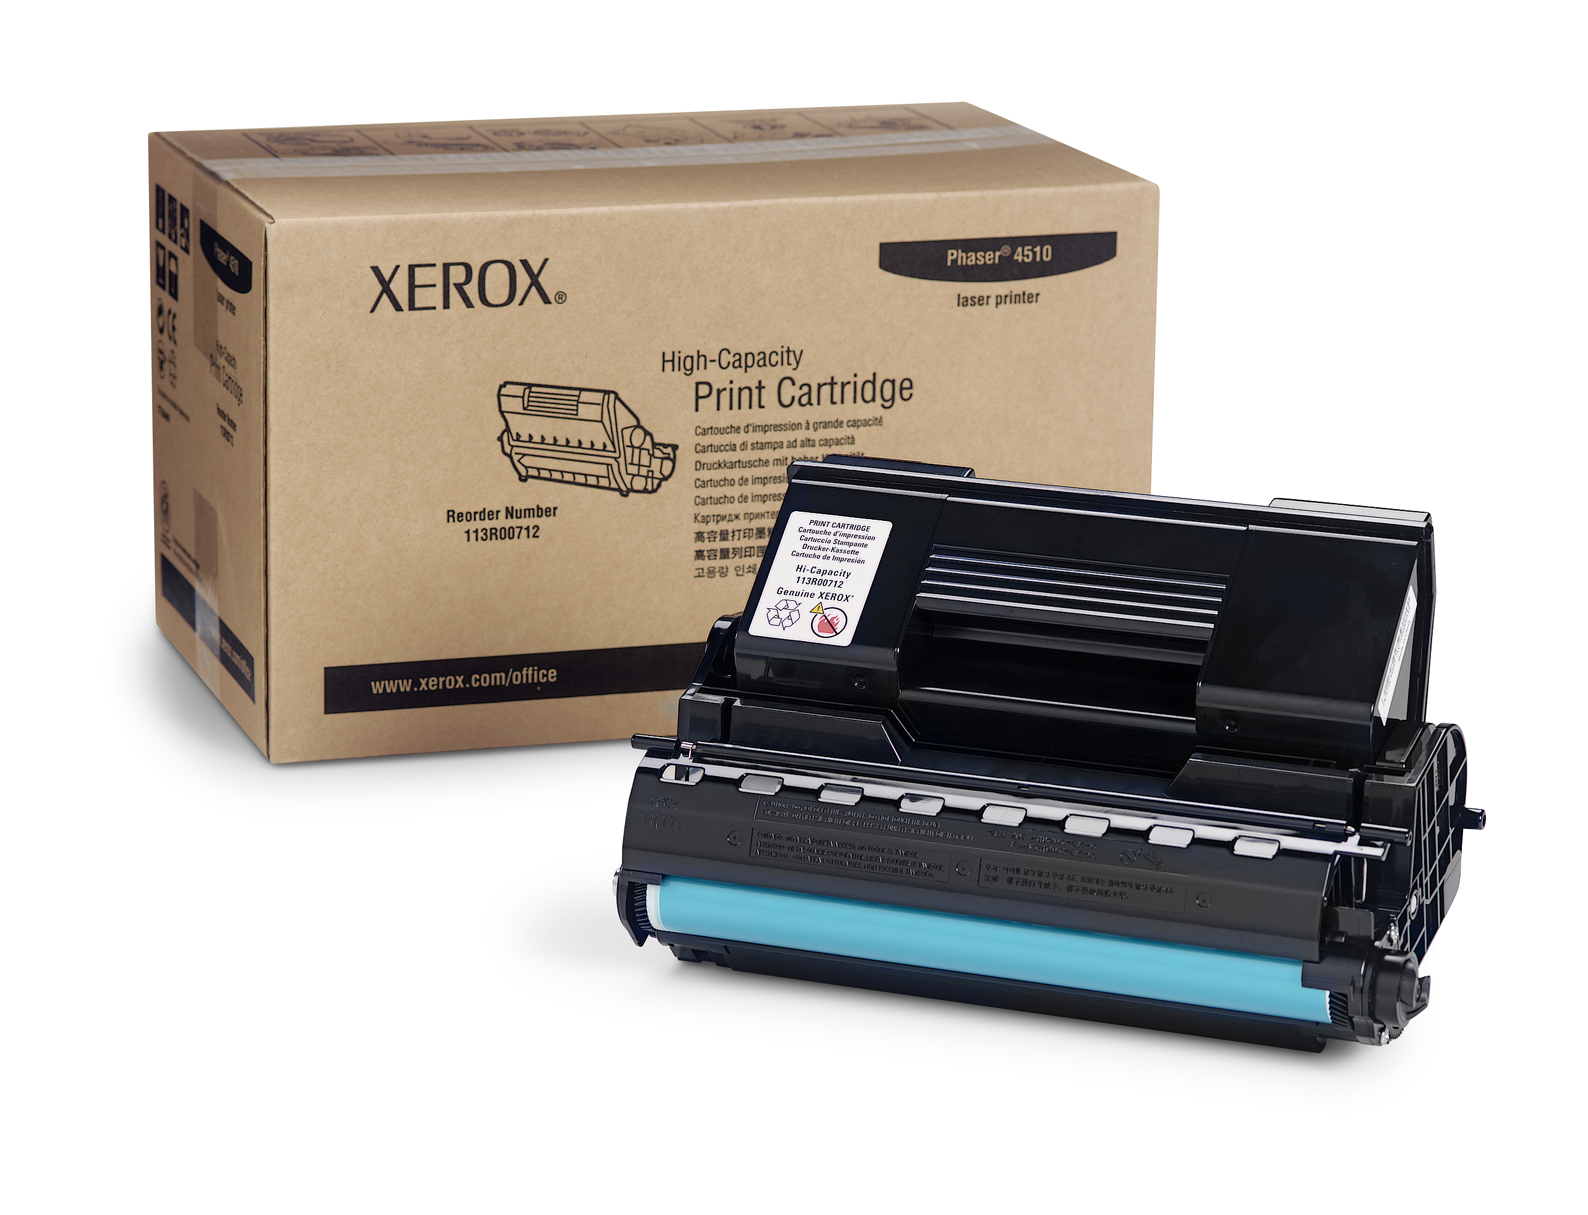 High capacity 4510 Print Cartridge (19K) 113R00712 Genuine Xerox Supplies